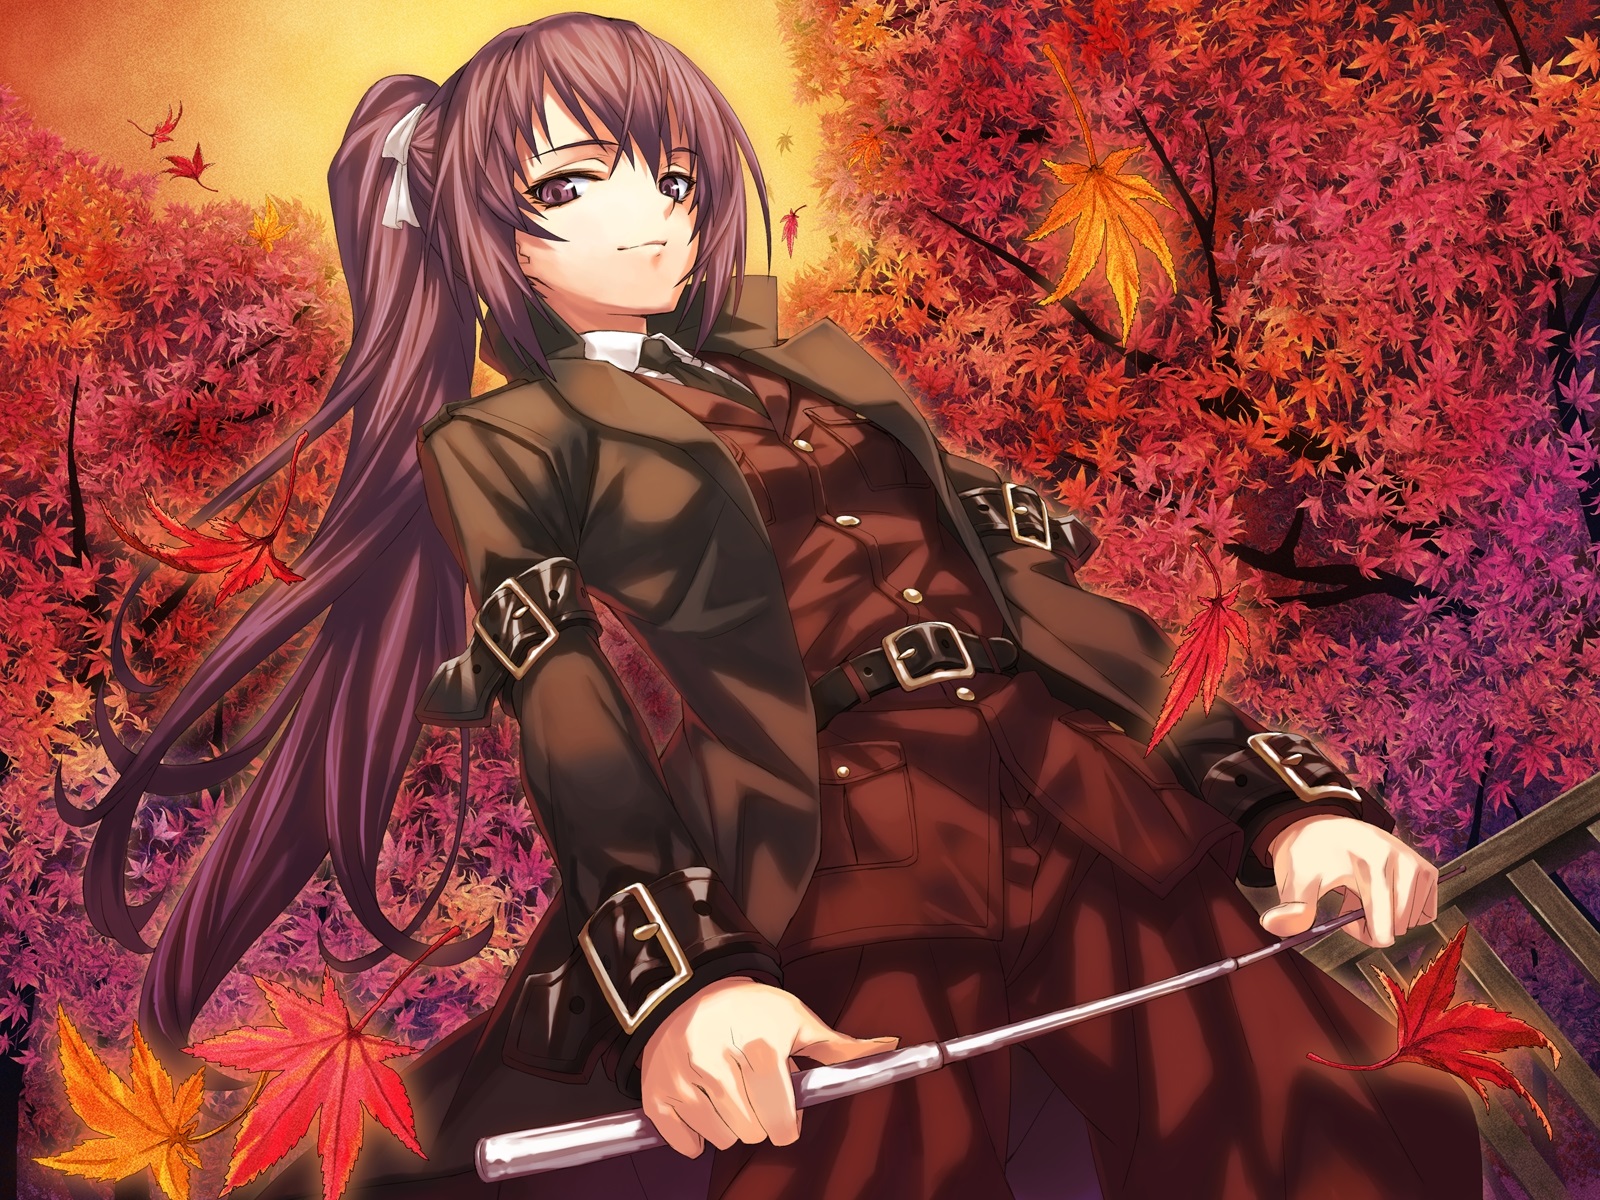 Autumn Anime Girl Wallpapers